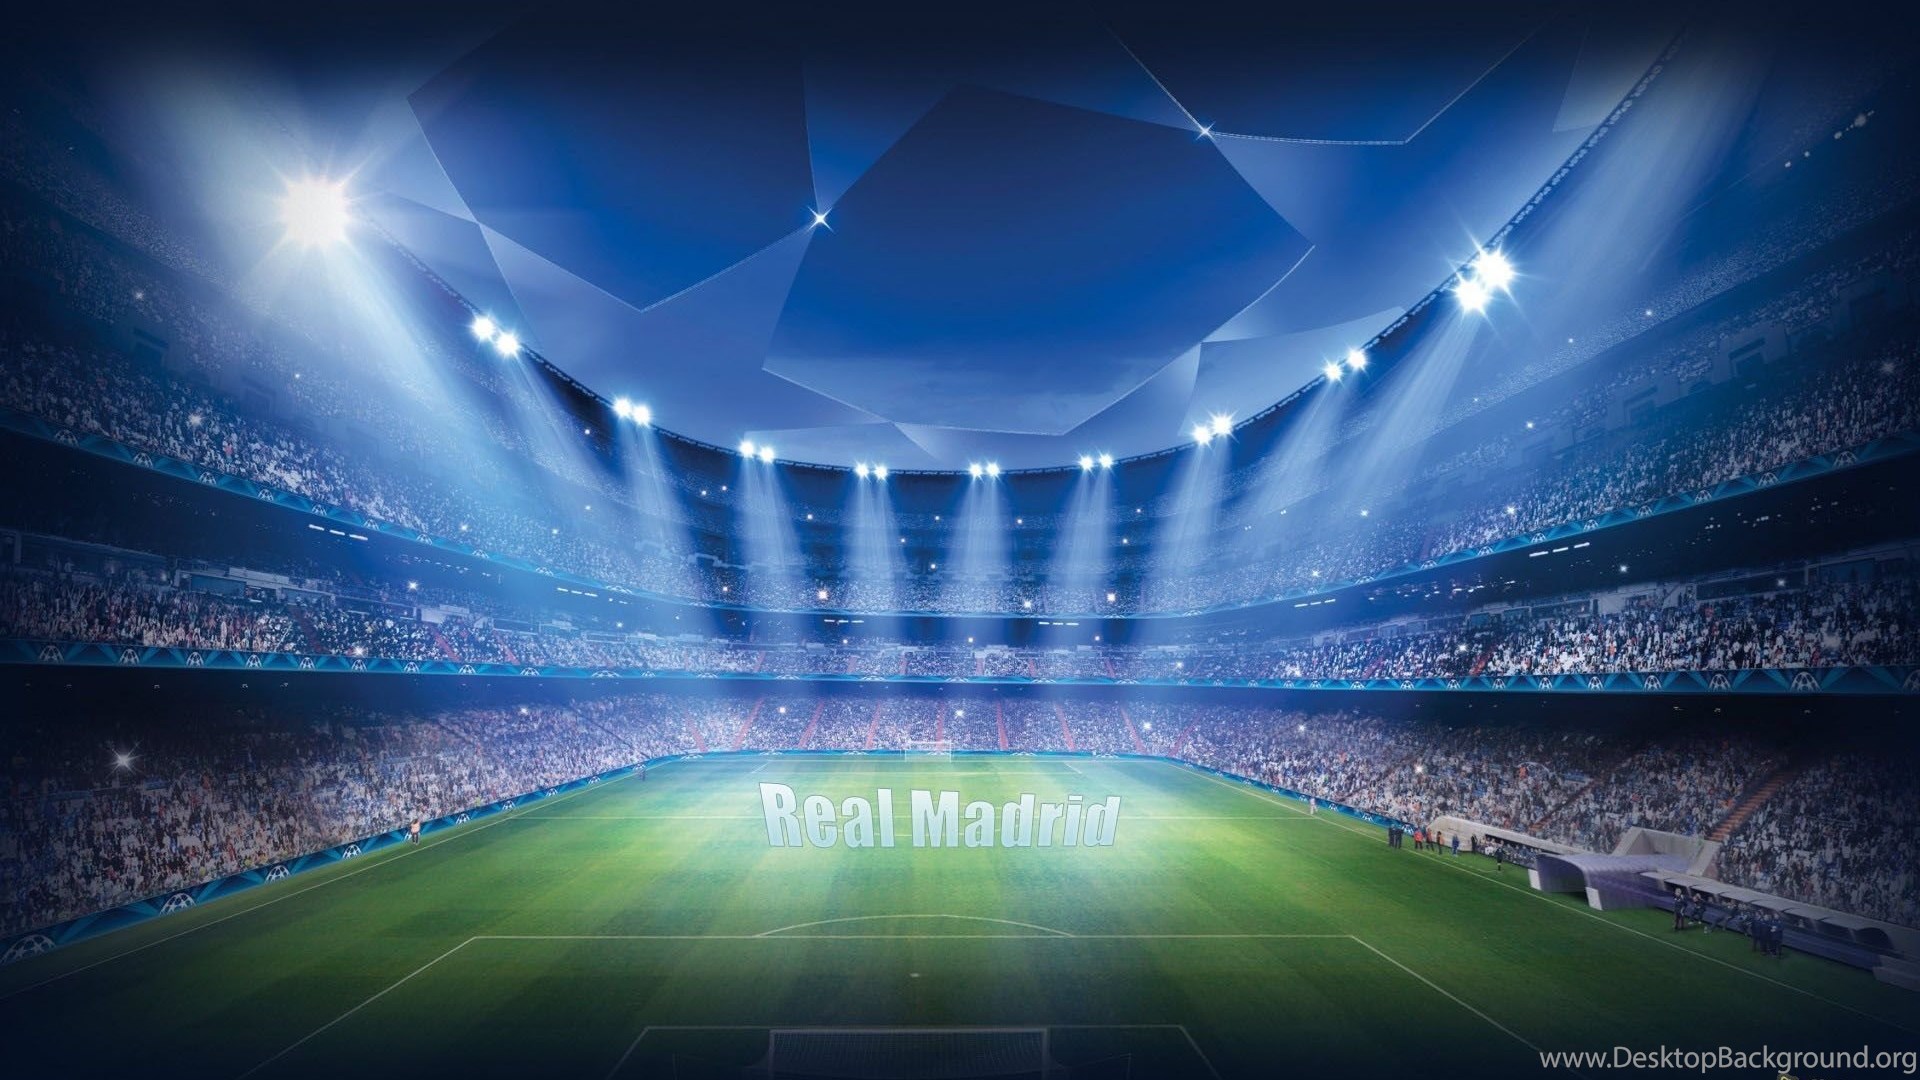 Real Madrid Santiago Bernabeu Stadium Wallpaper Desktop Background